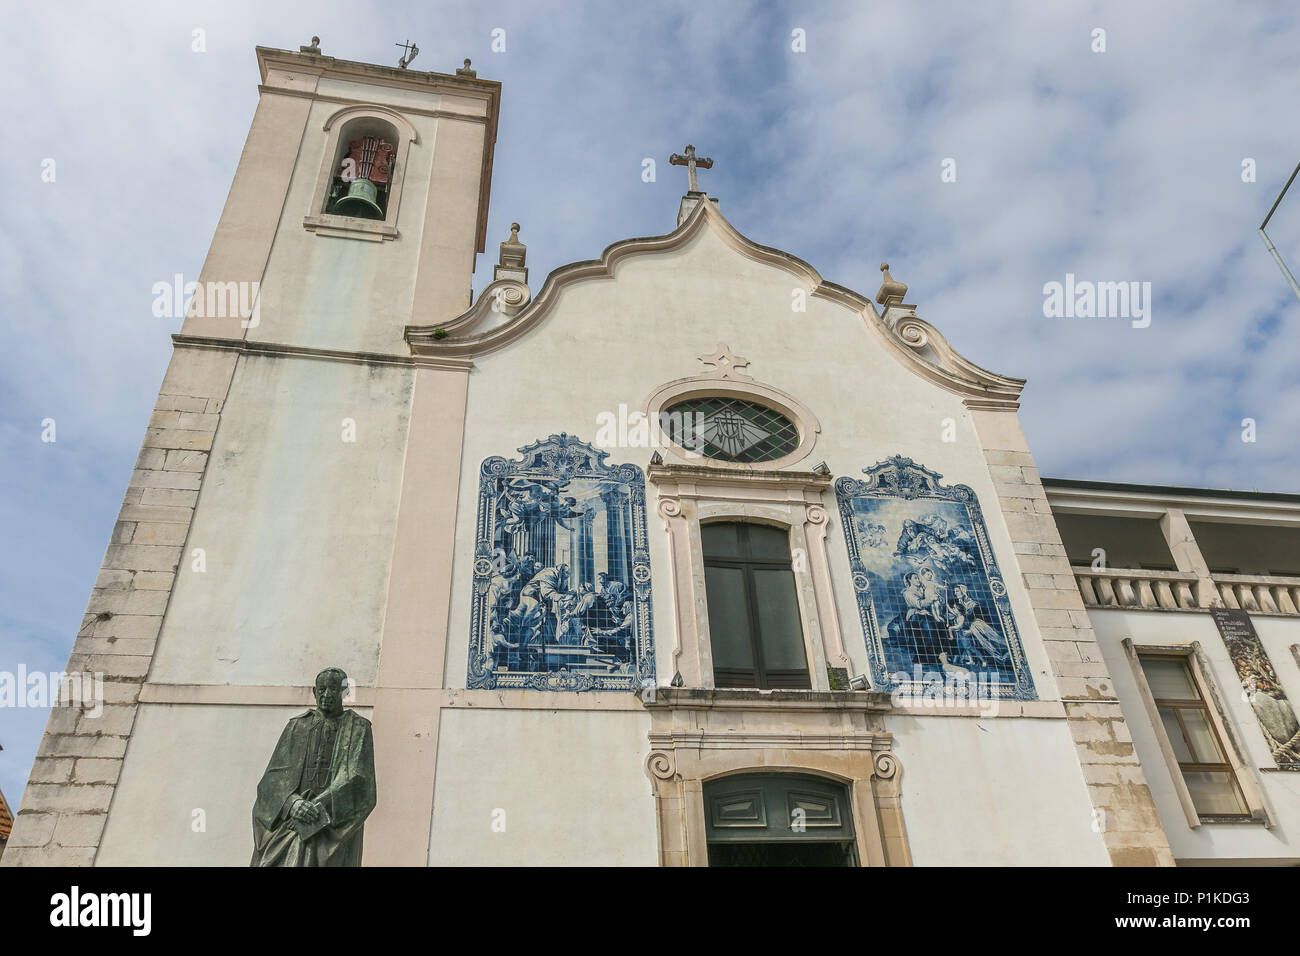 The Vera Cruz Church in Aveiro, Portugal. Azulejo tiled panels on the facade. Stock Photo